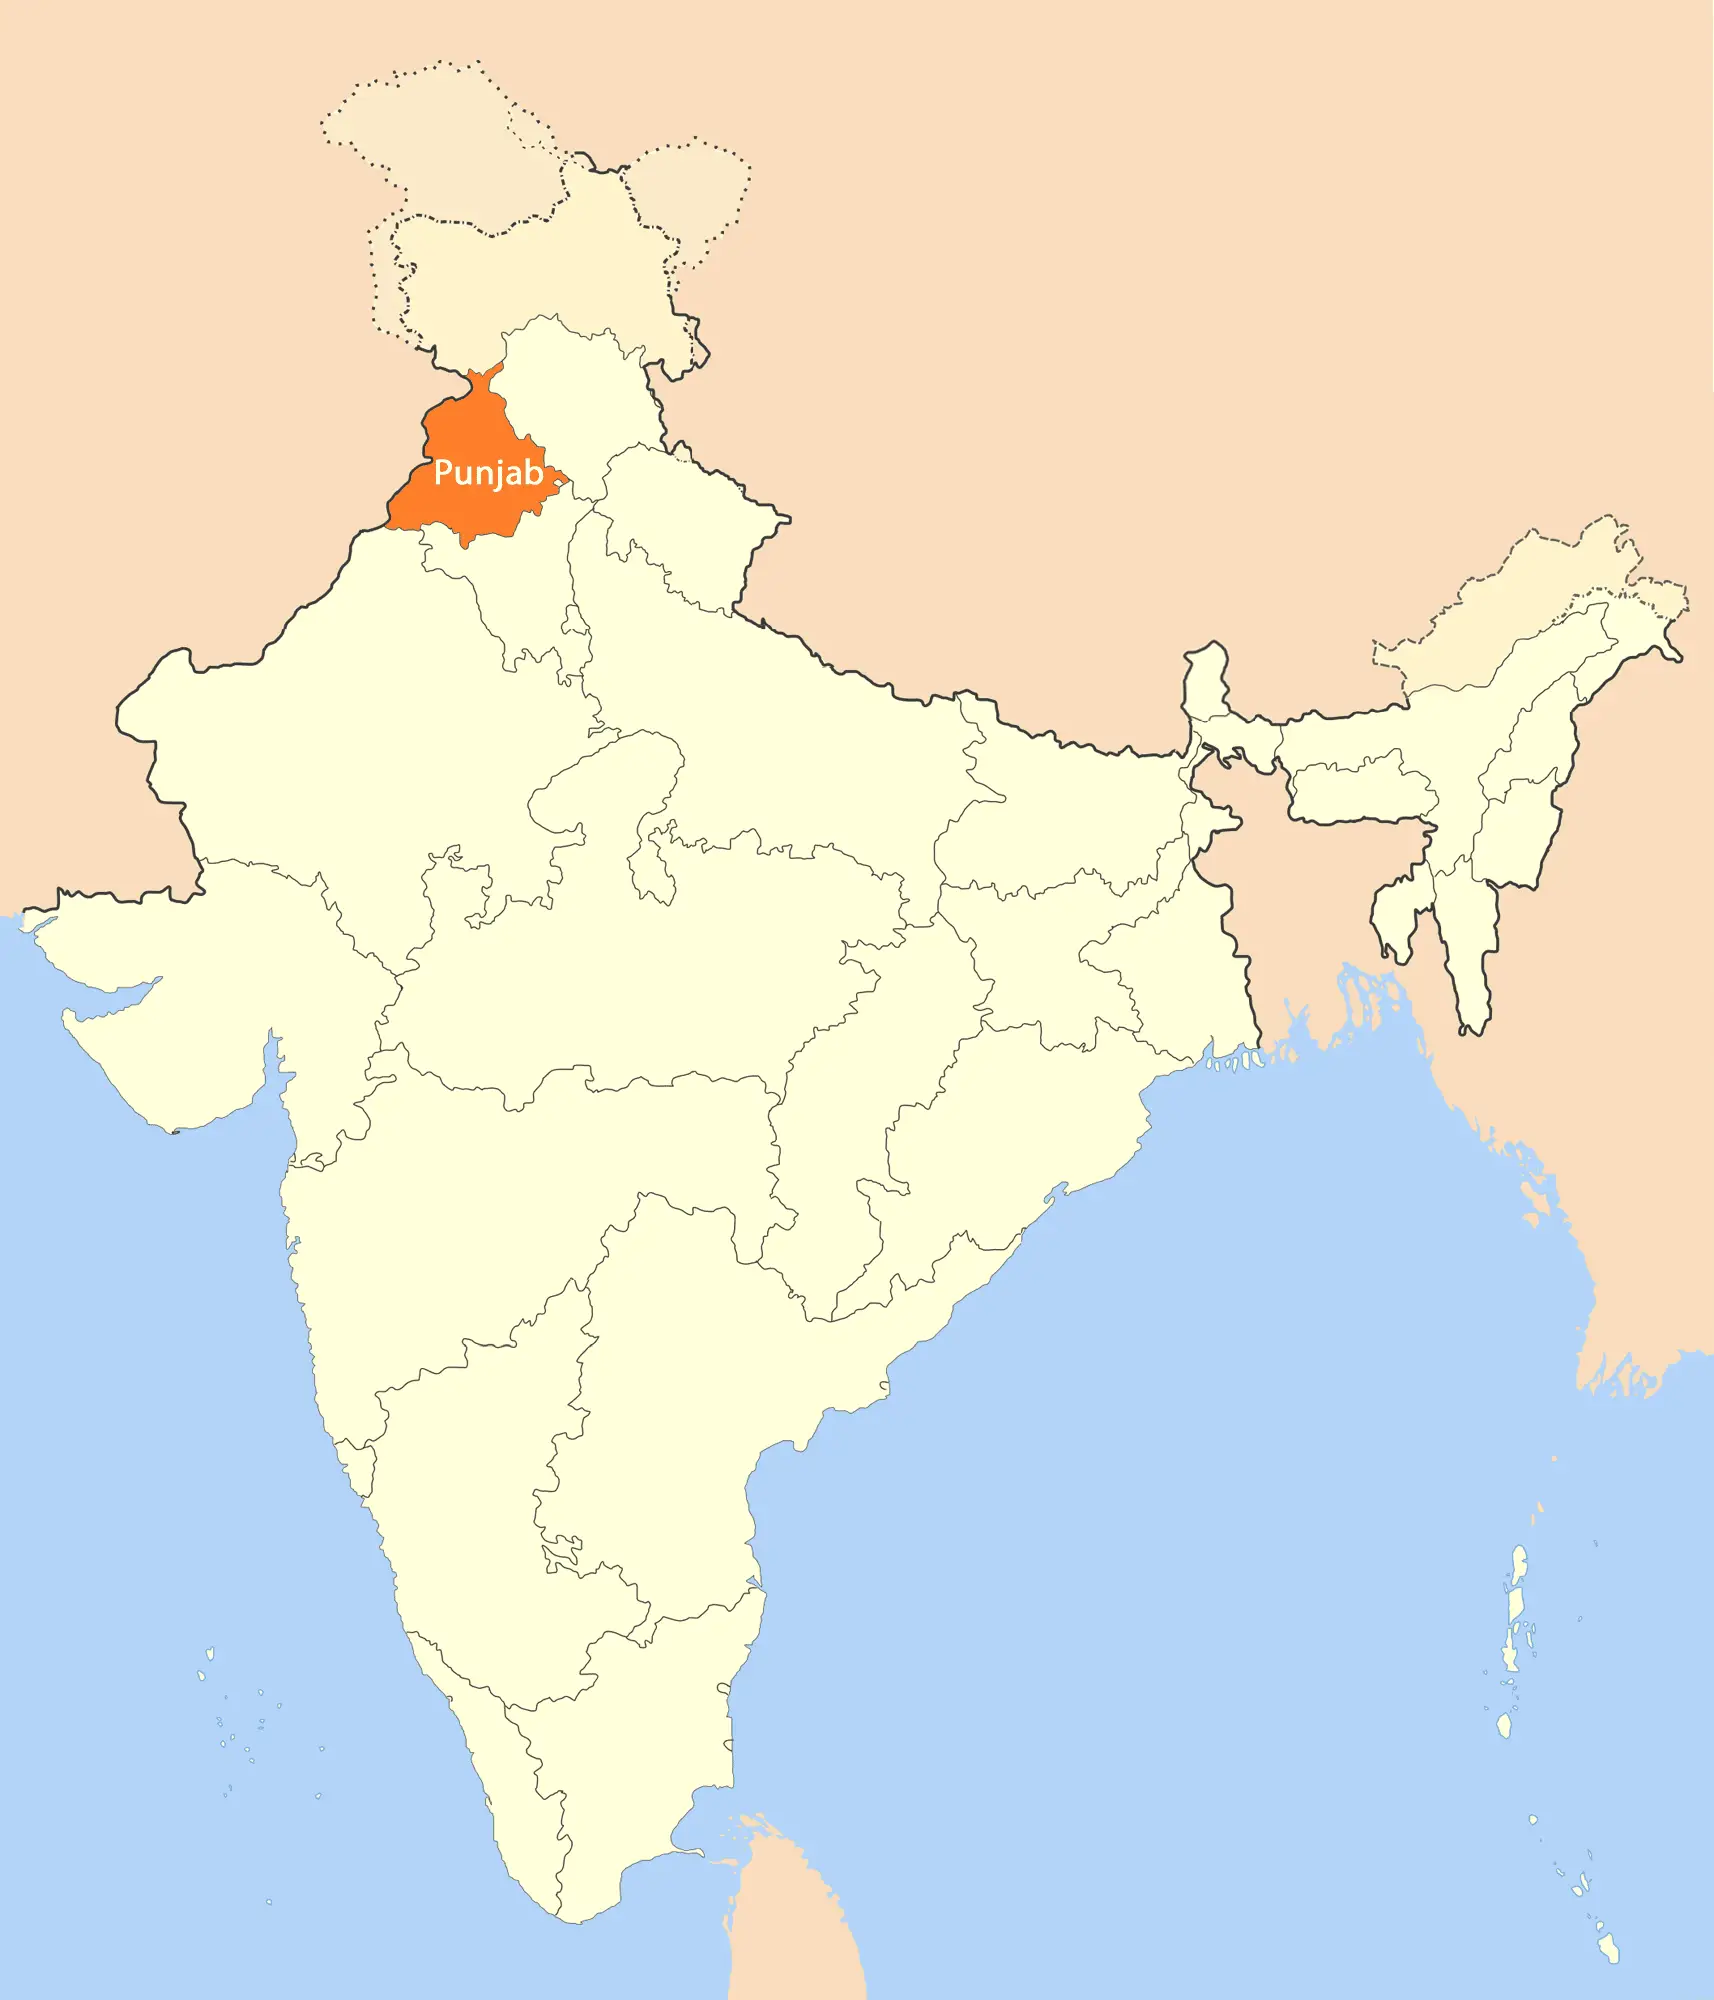 Location Map of Punjab